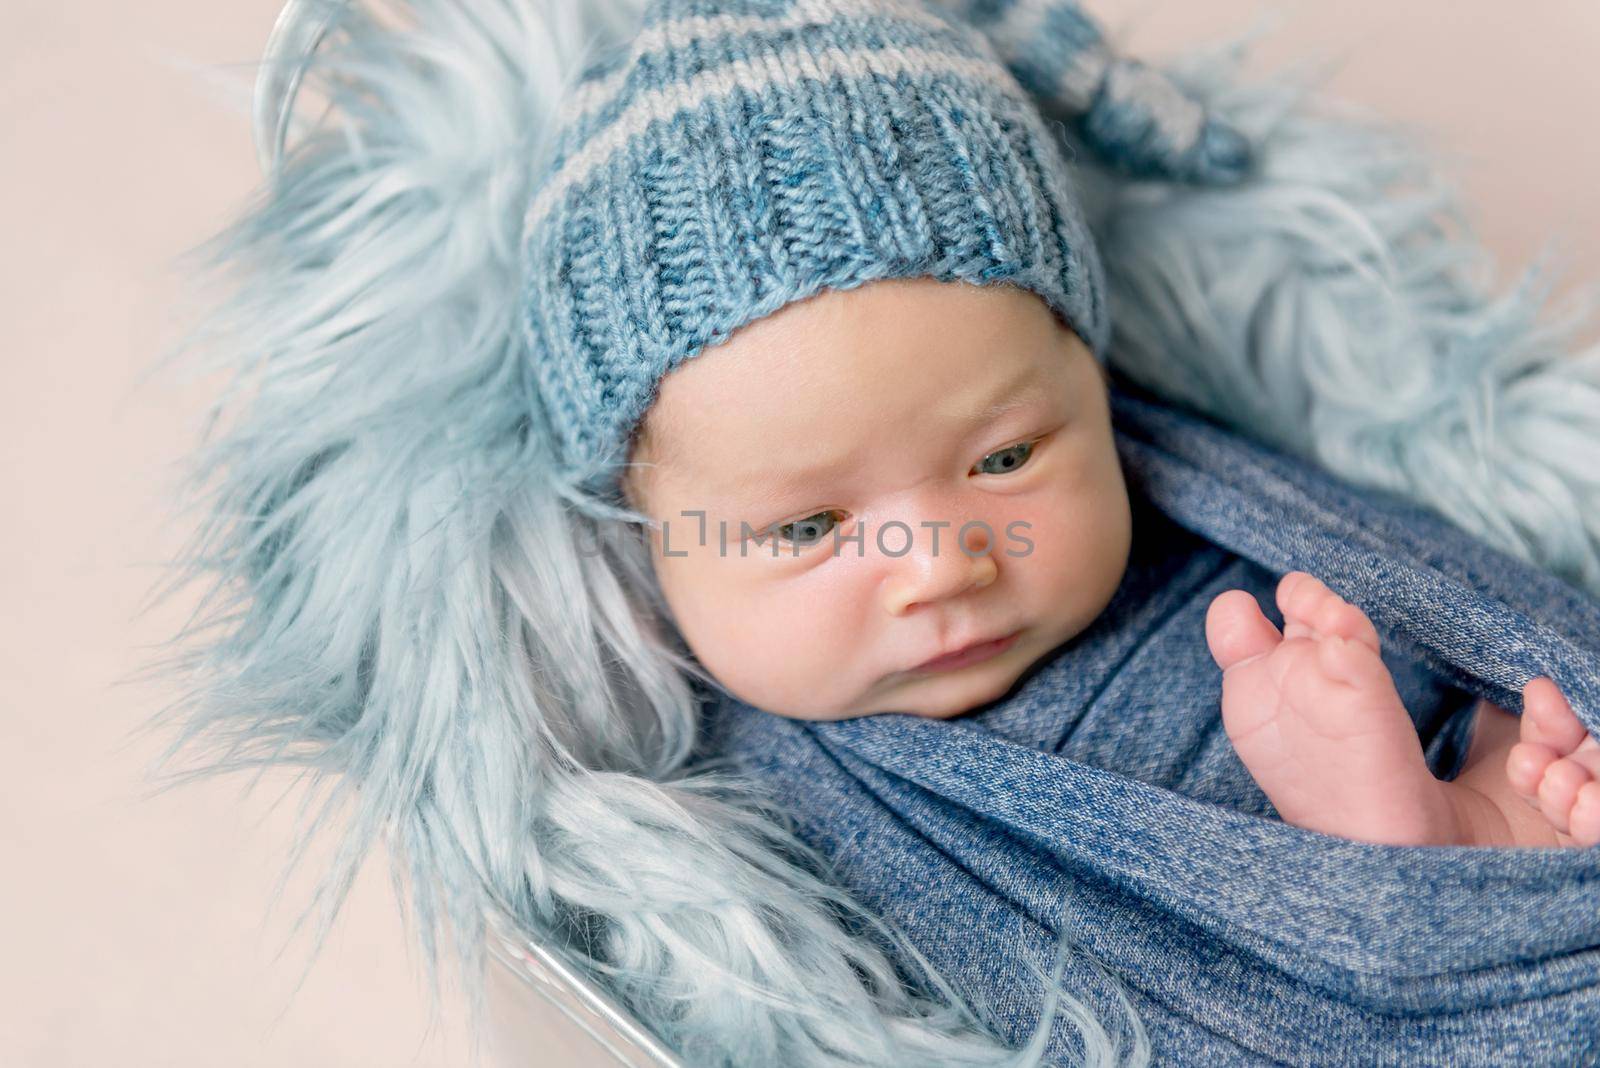 Newborn baby lying in trough with blue fluffy blanket. Little newborn baby boy wrapped in blue blanket and wearing in blue bonnet